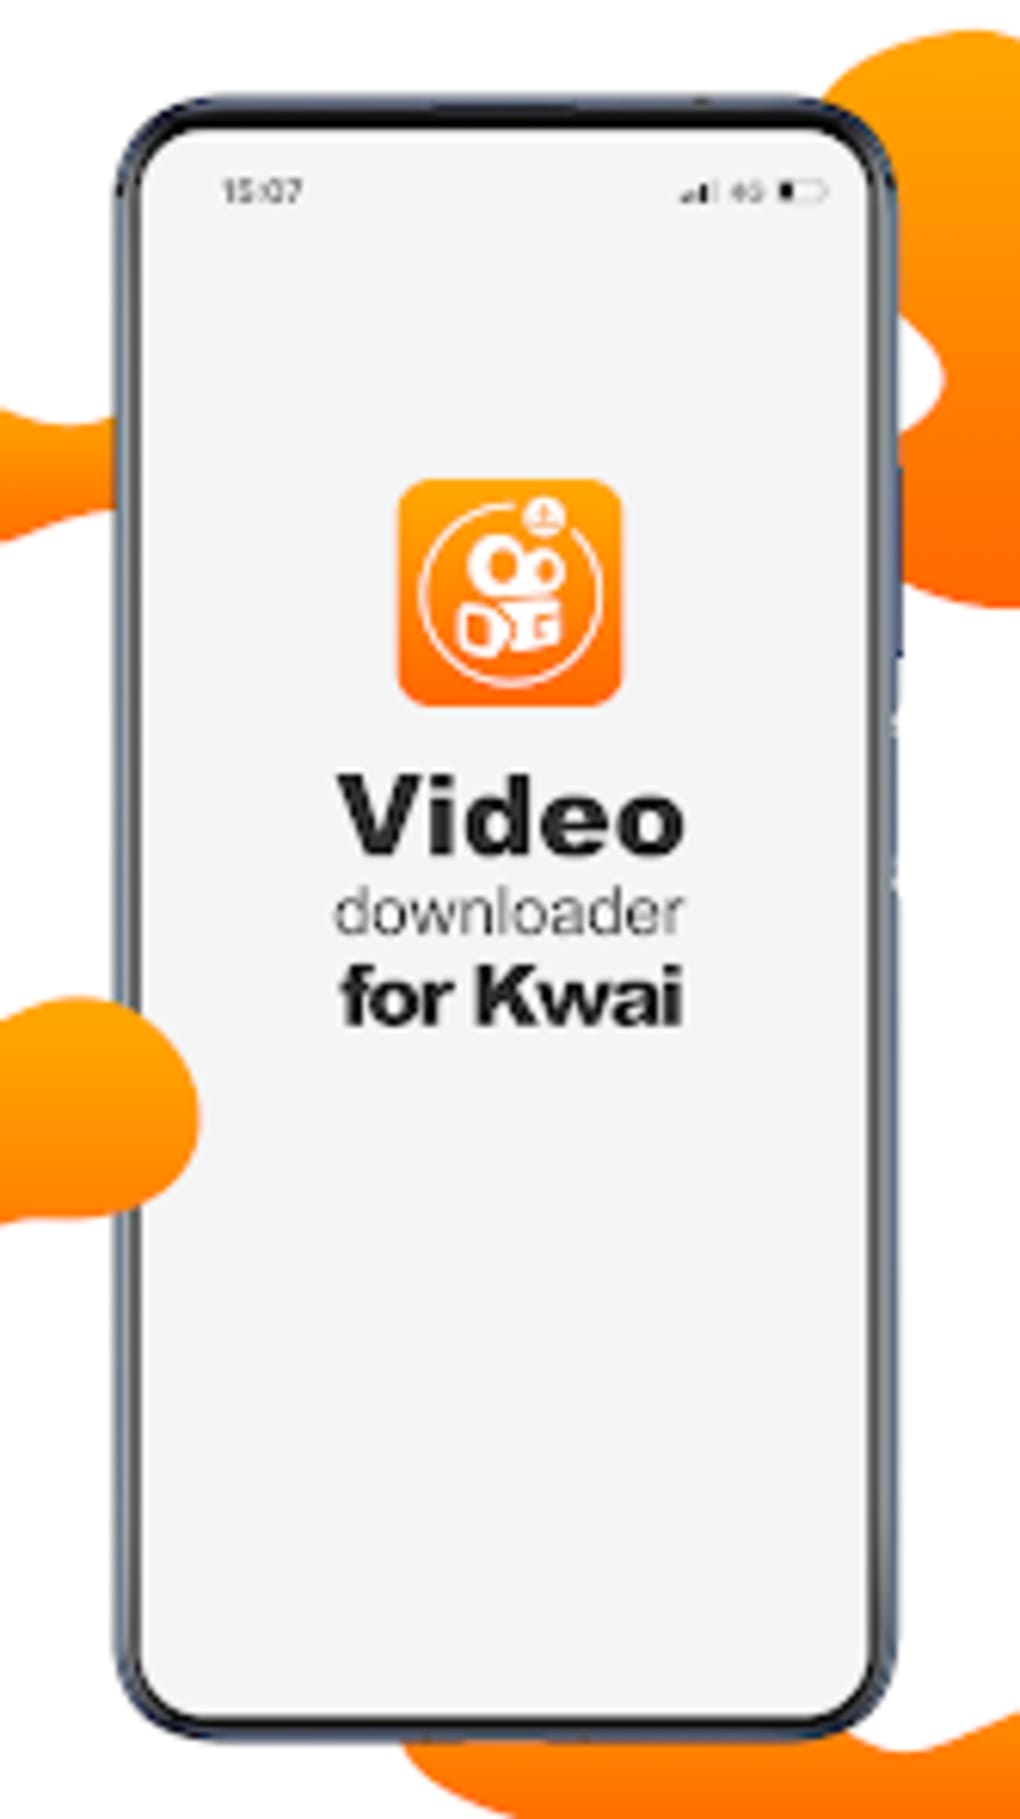 Kwai app on smartphone screen on orange background. Social media